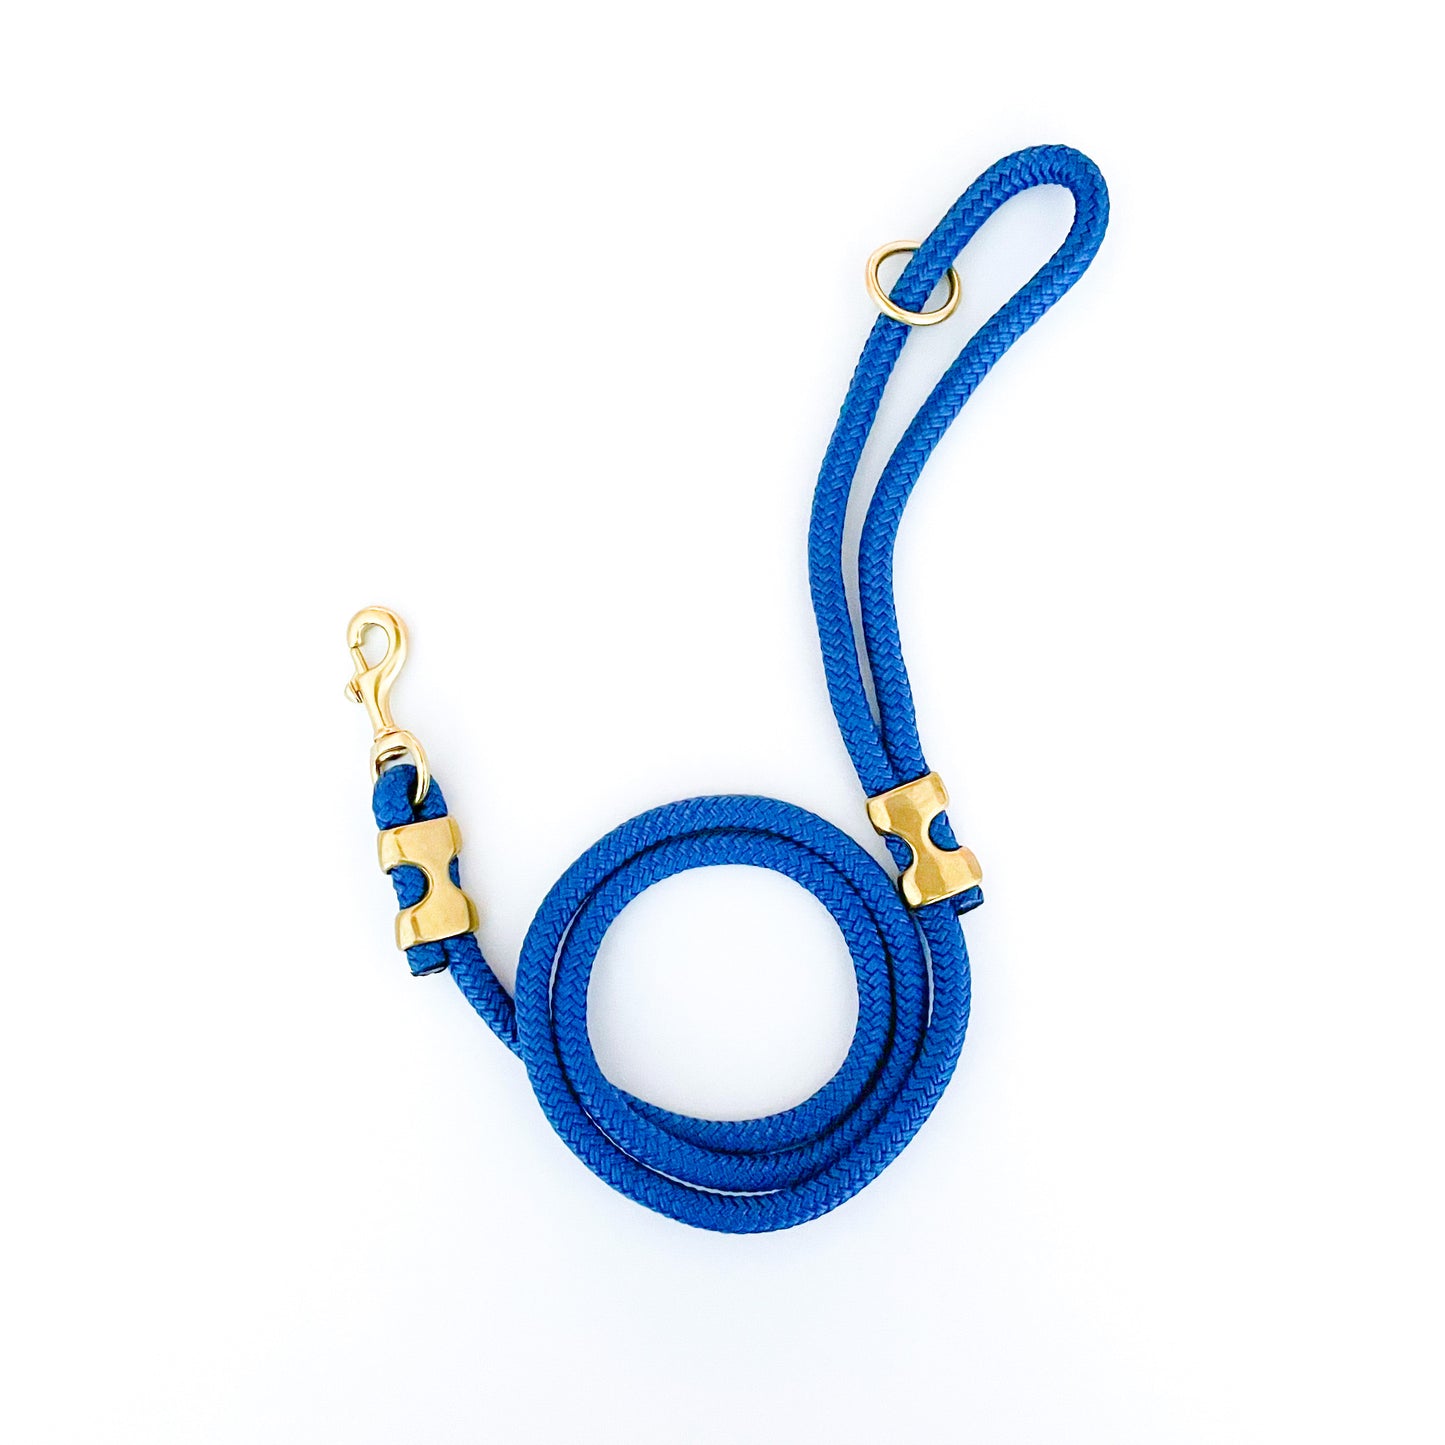 Sailor Blue Rope Dog Leash